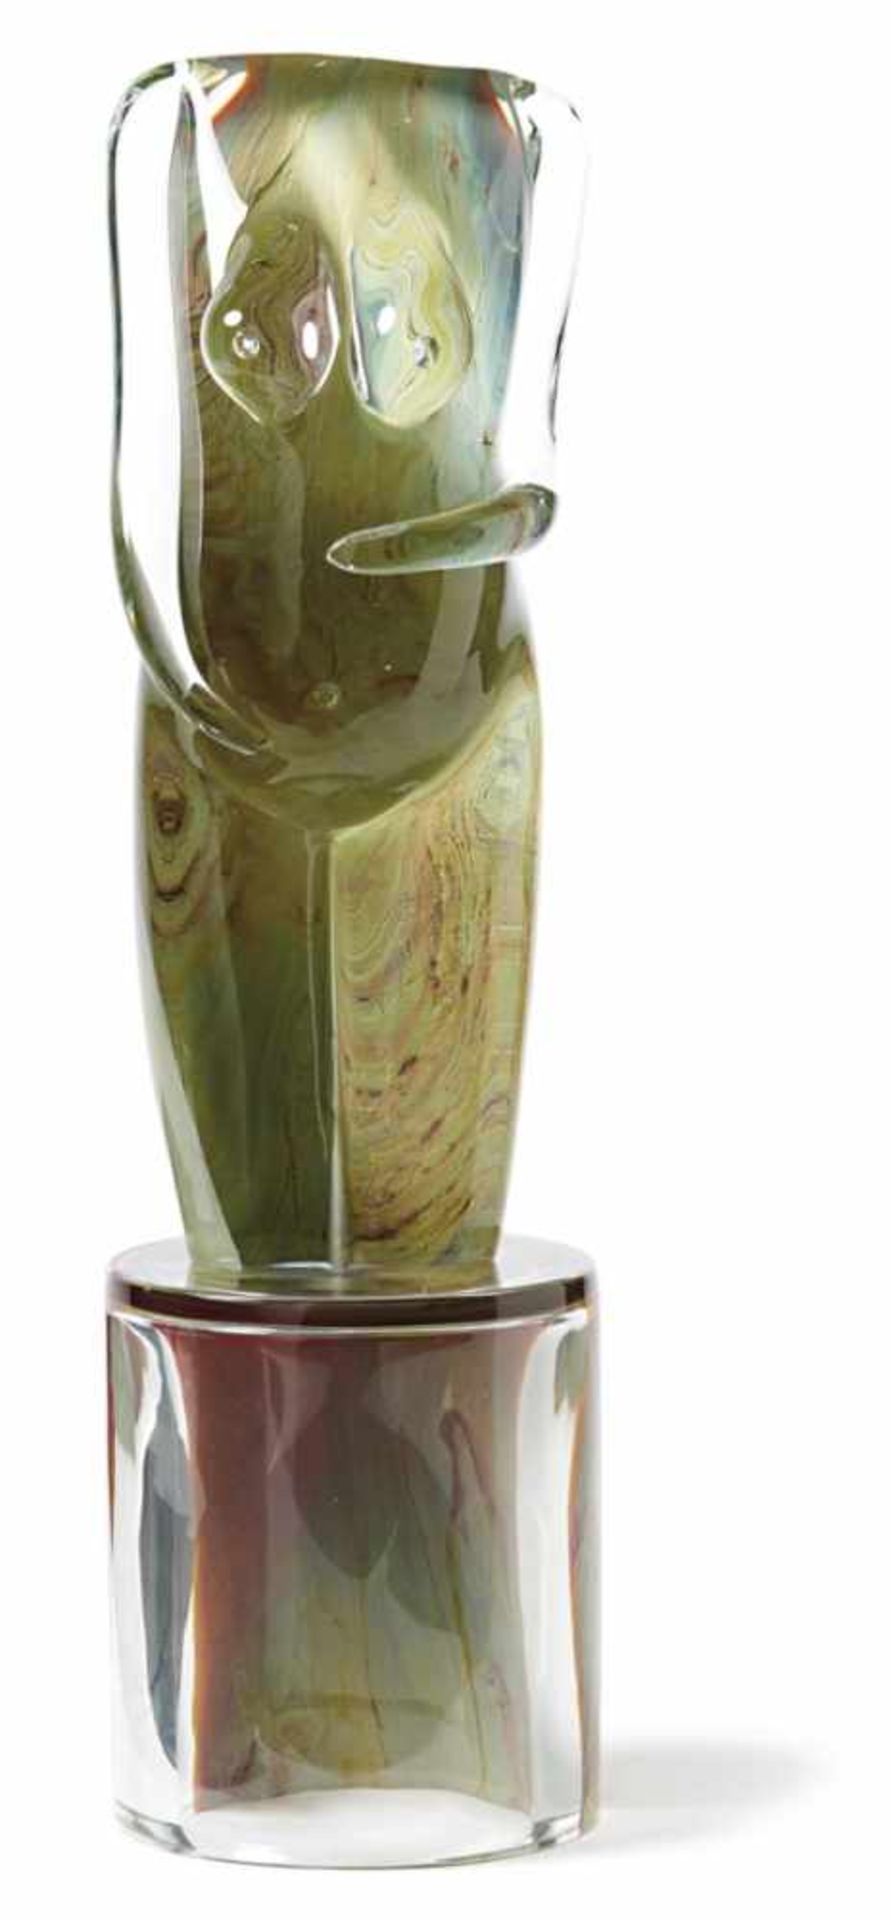 Glasskulptur "Schwangere" Murano, 20. Jh. Zylinderförmiger Sockel mit Torso einer schwangeren